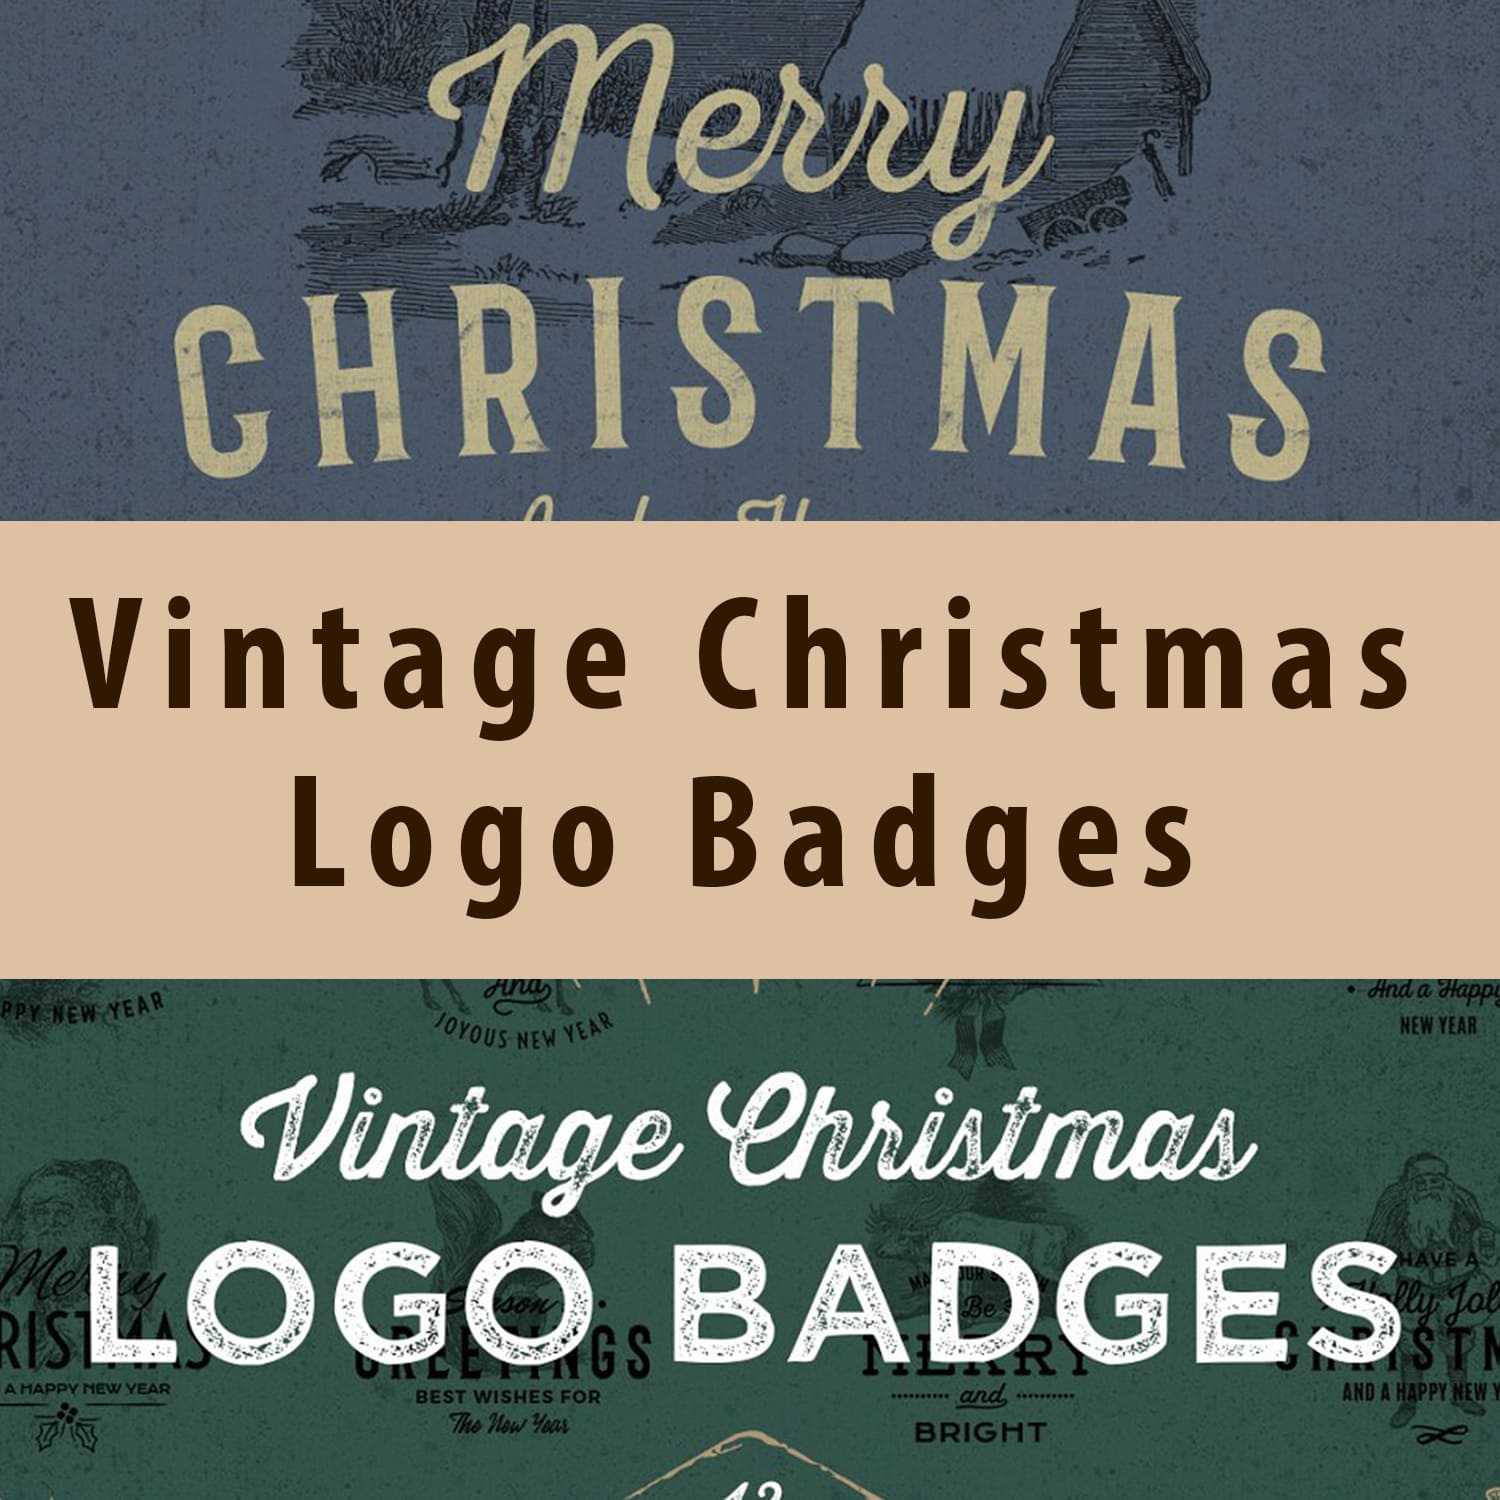 Vintage Christmas Logo Badges main cover.